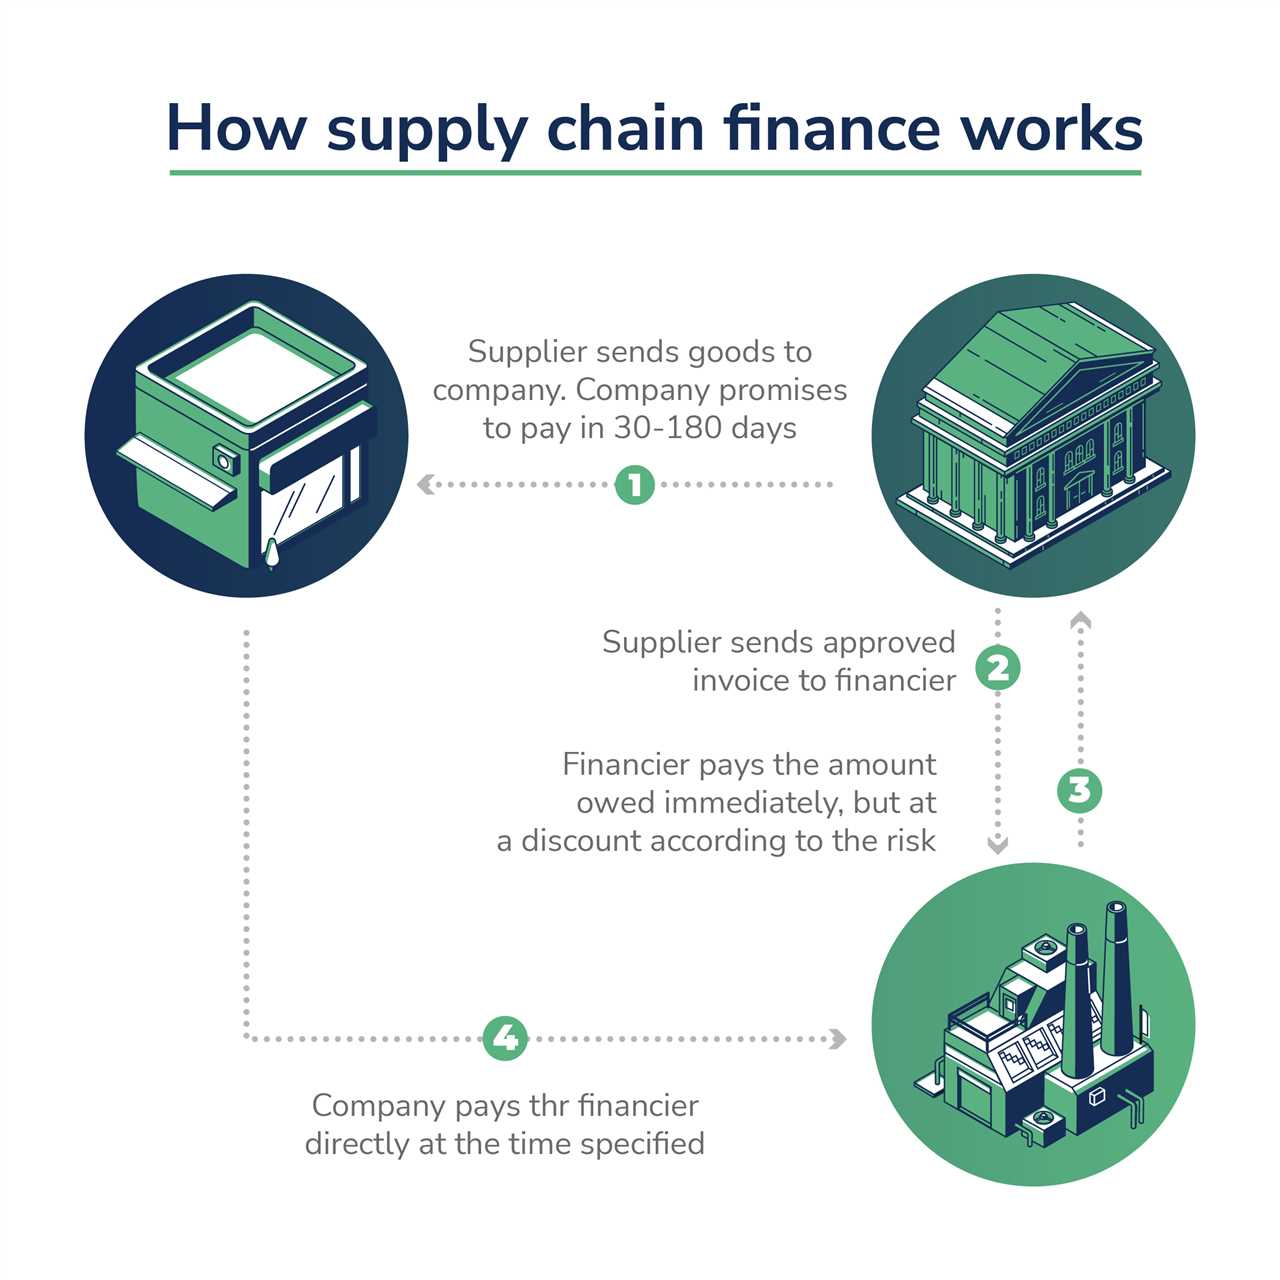 2. Company B: Mitigating Supply Chain Risks